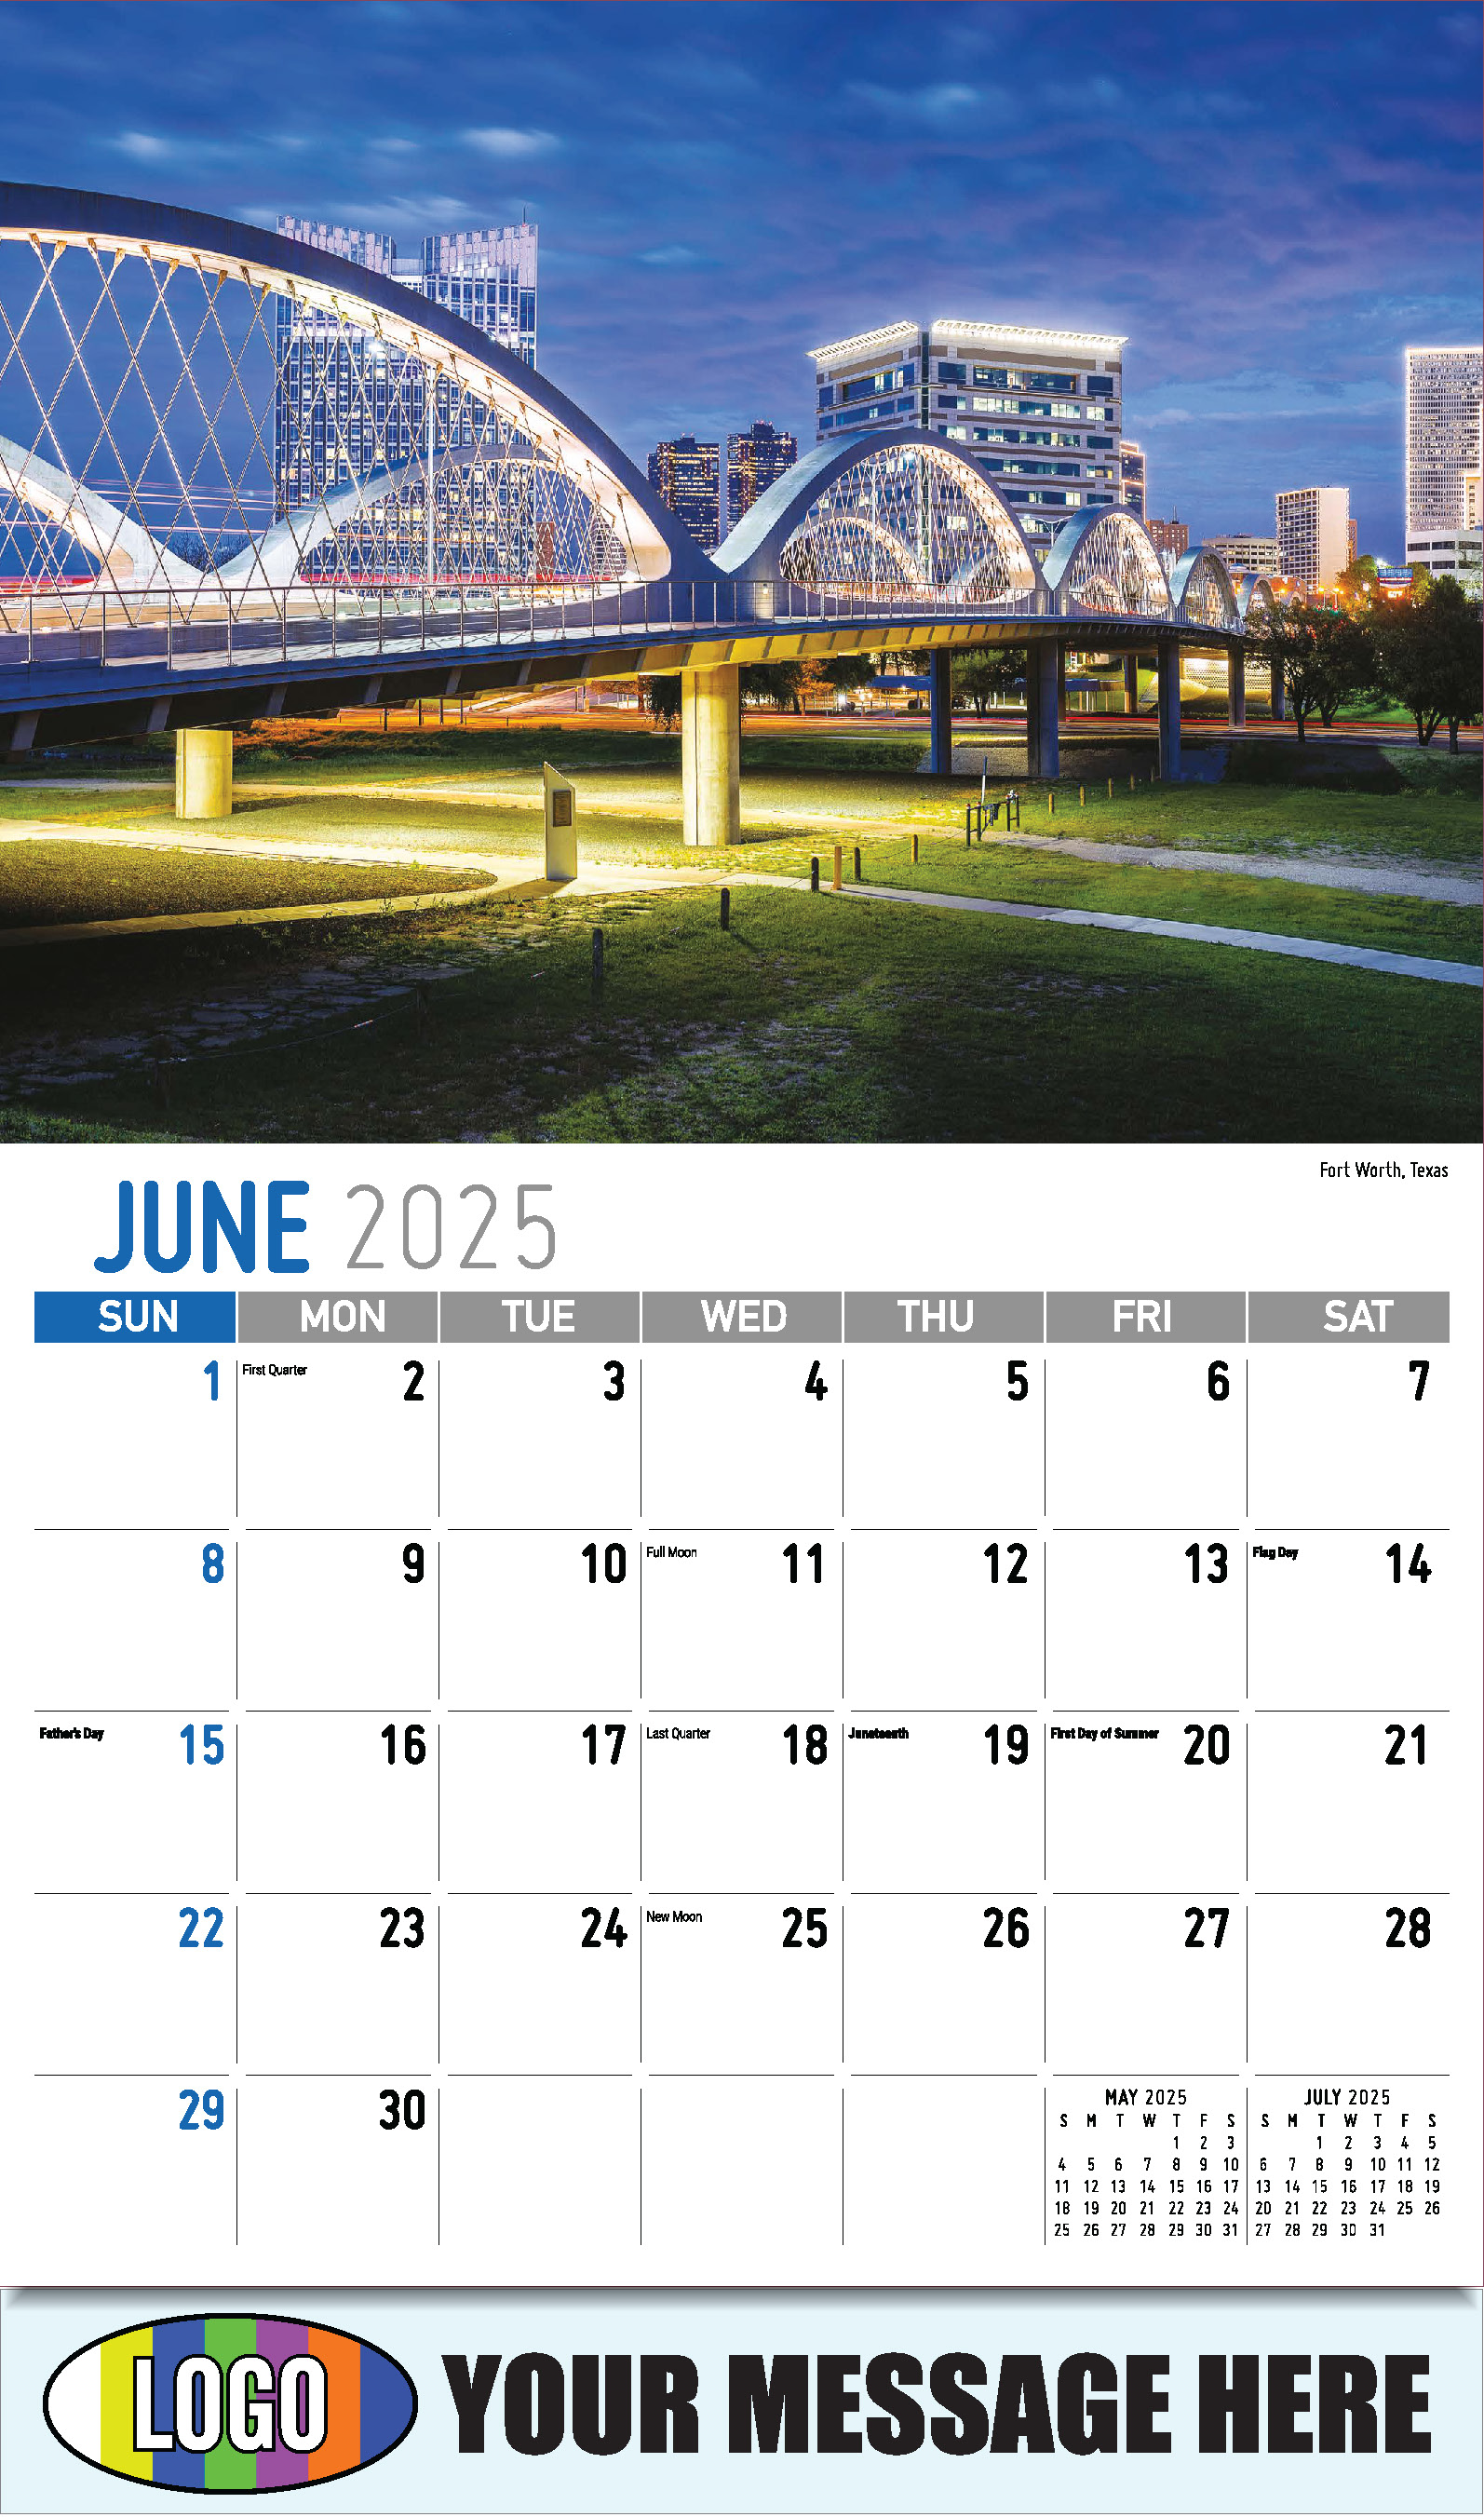 Scenes of America 2025 Business Advertising Wall Calendar - June